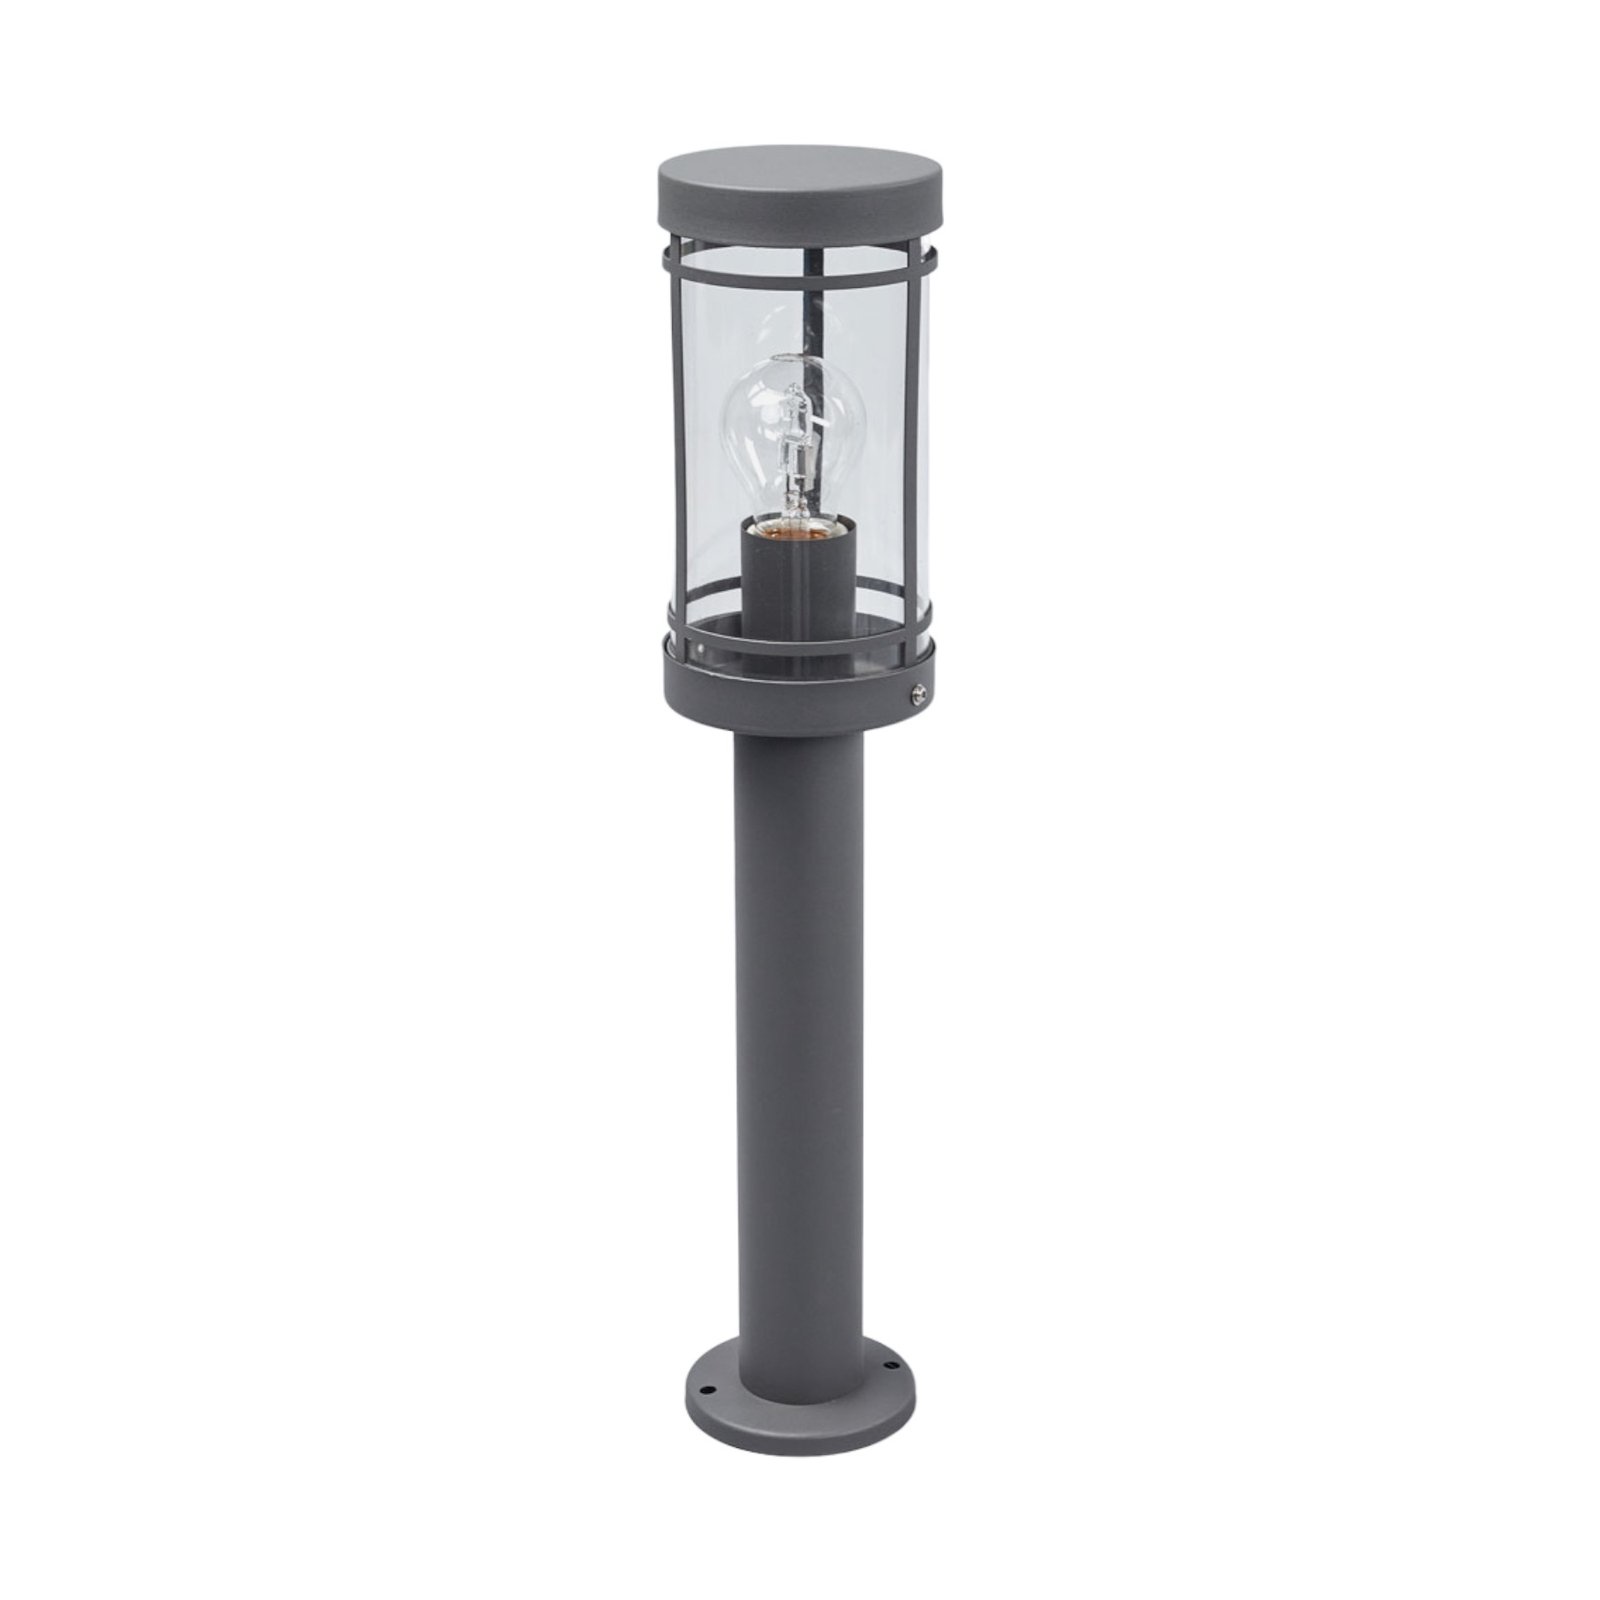 ELC Torido pillar lamp in dark grey